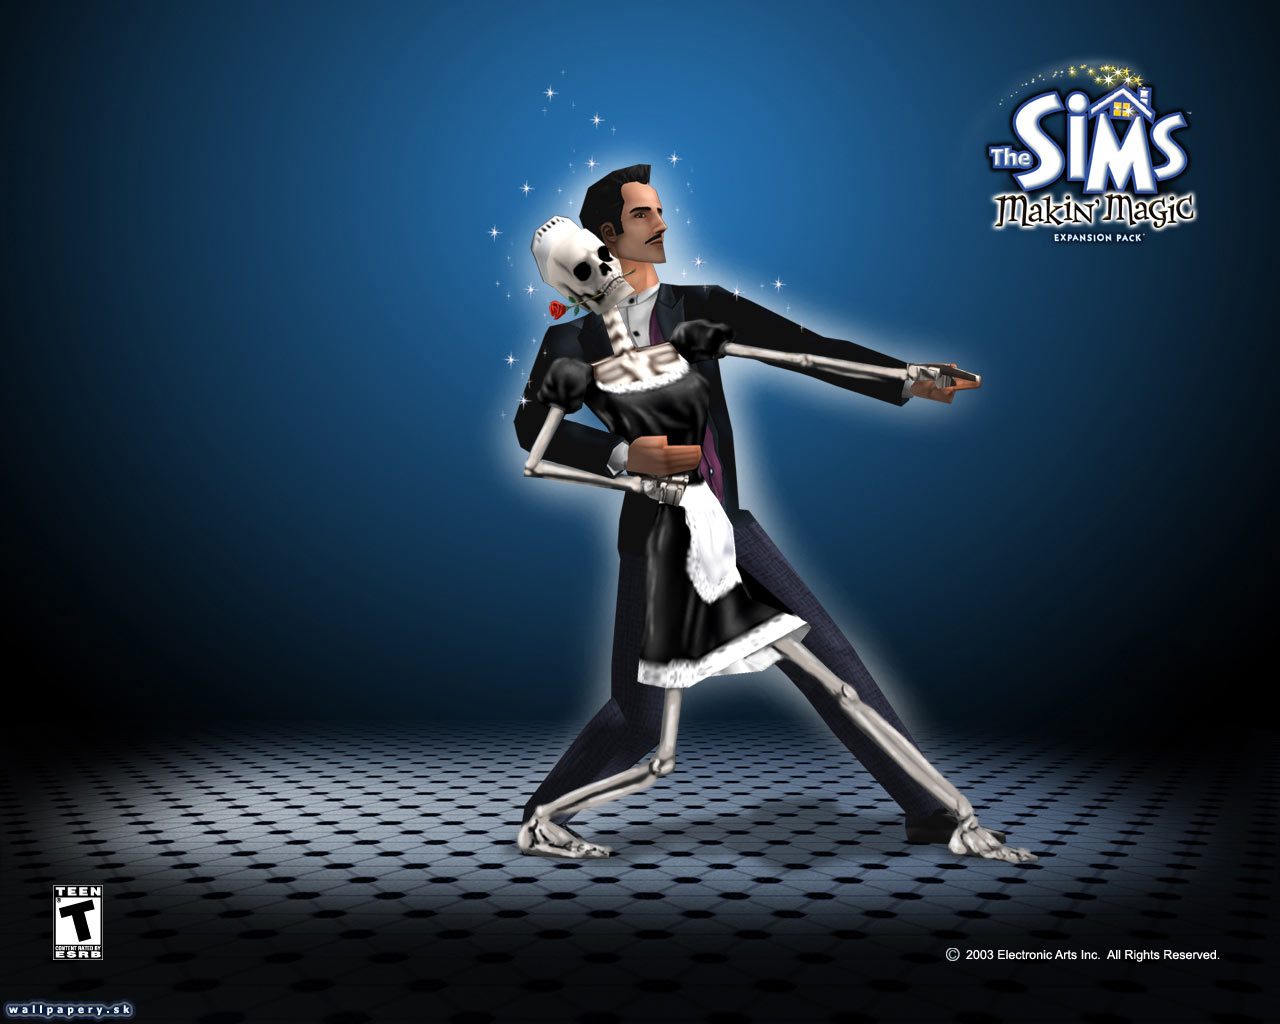 The Sims: Makin' Magic - wallpaper 2